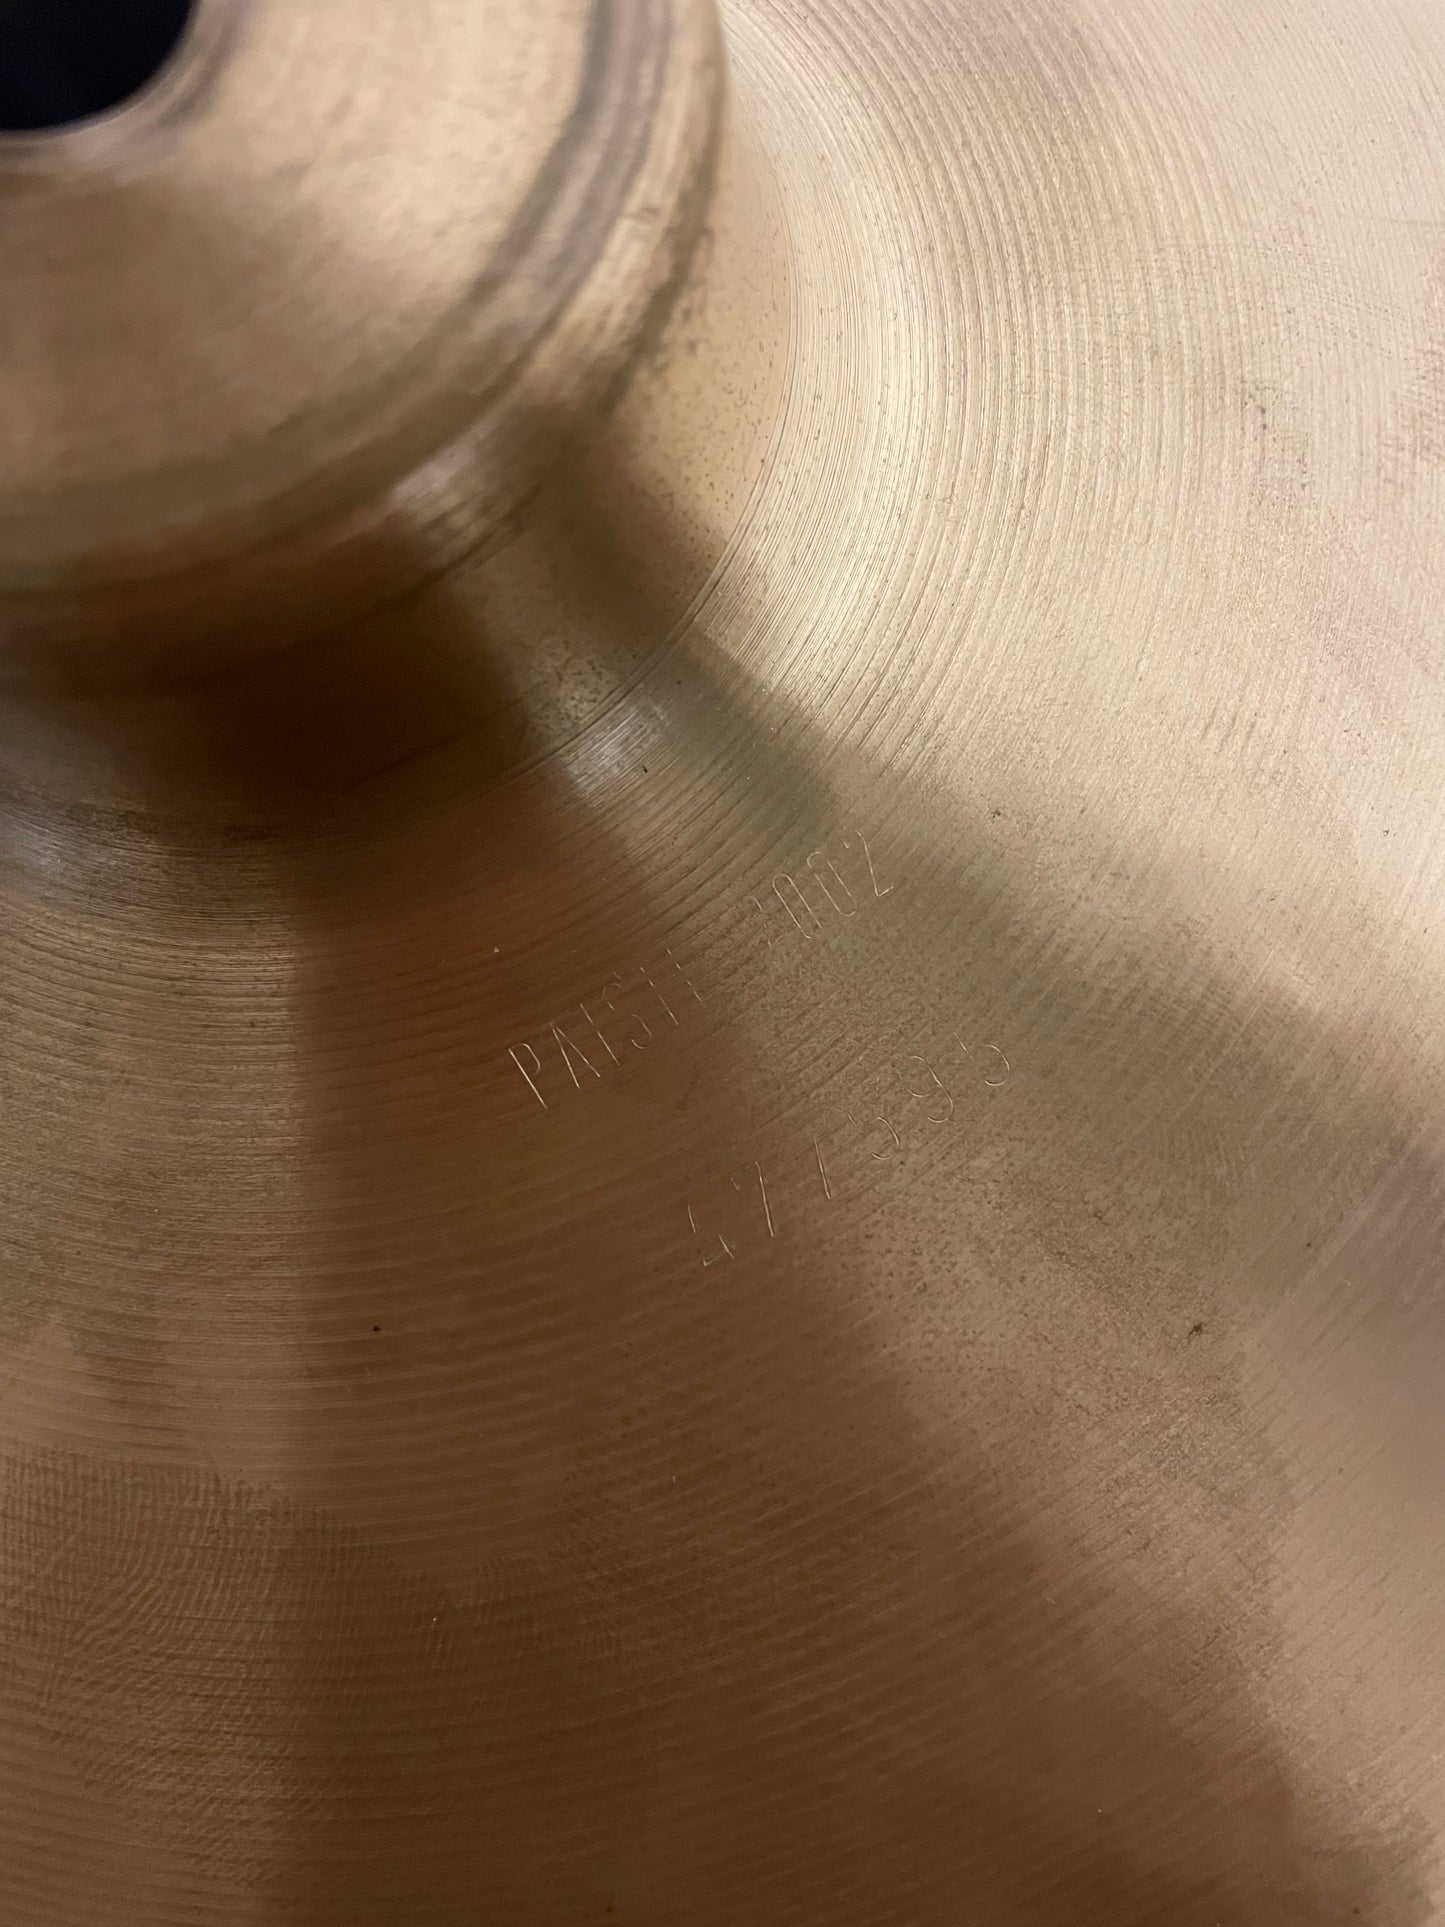 Vintage Paiste 2002 18”/45cm China Cymbal / Drum Accessory / 1297g #FD21